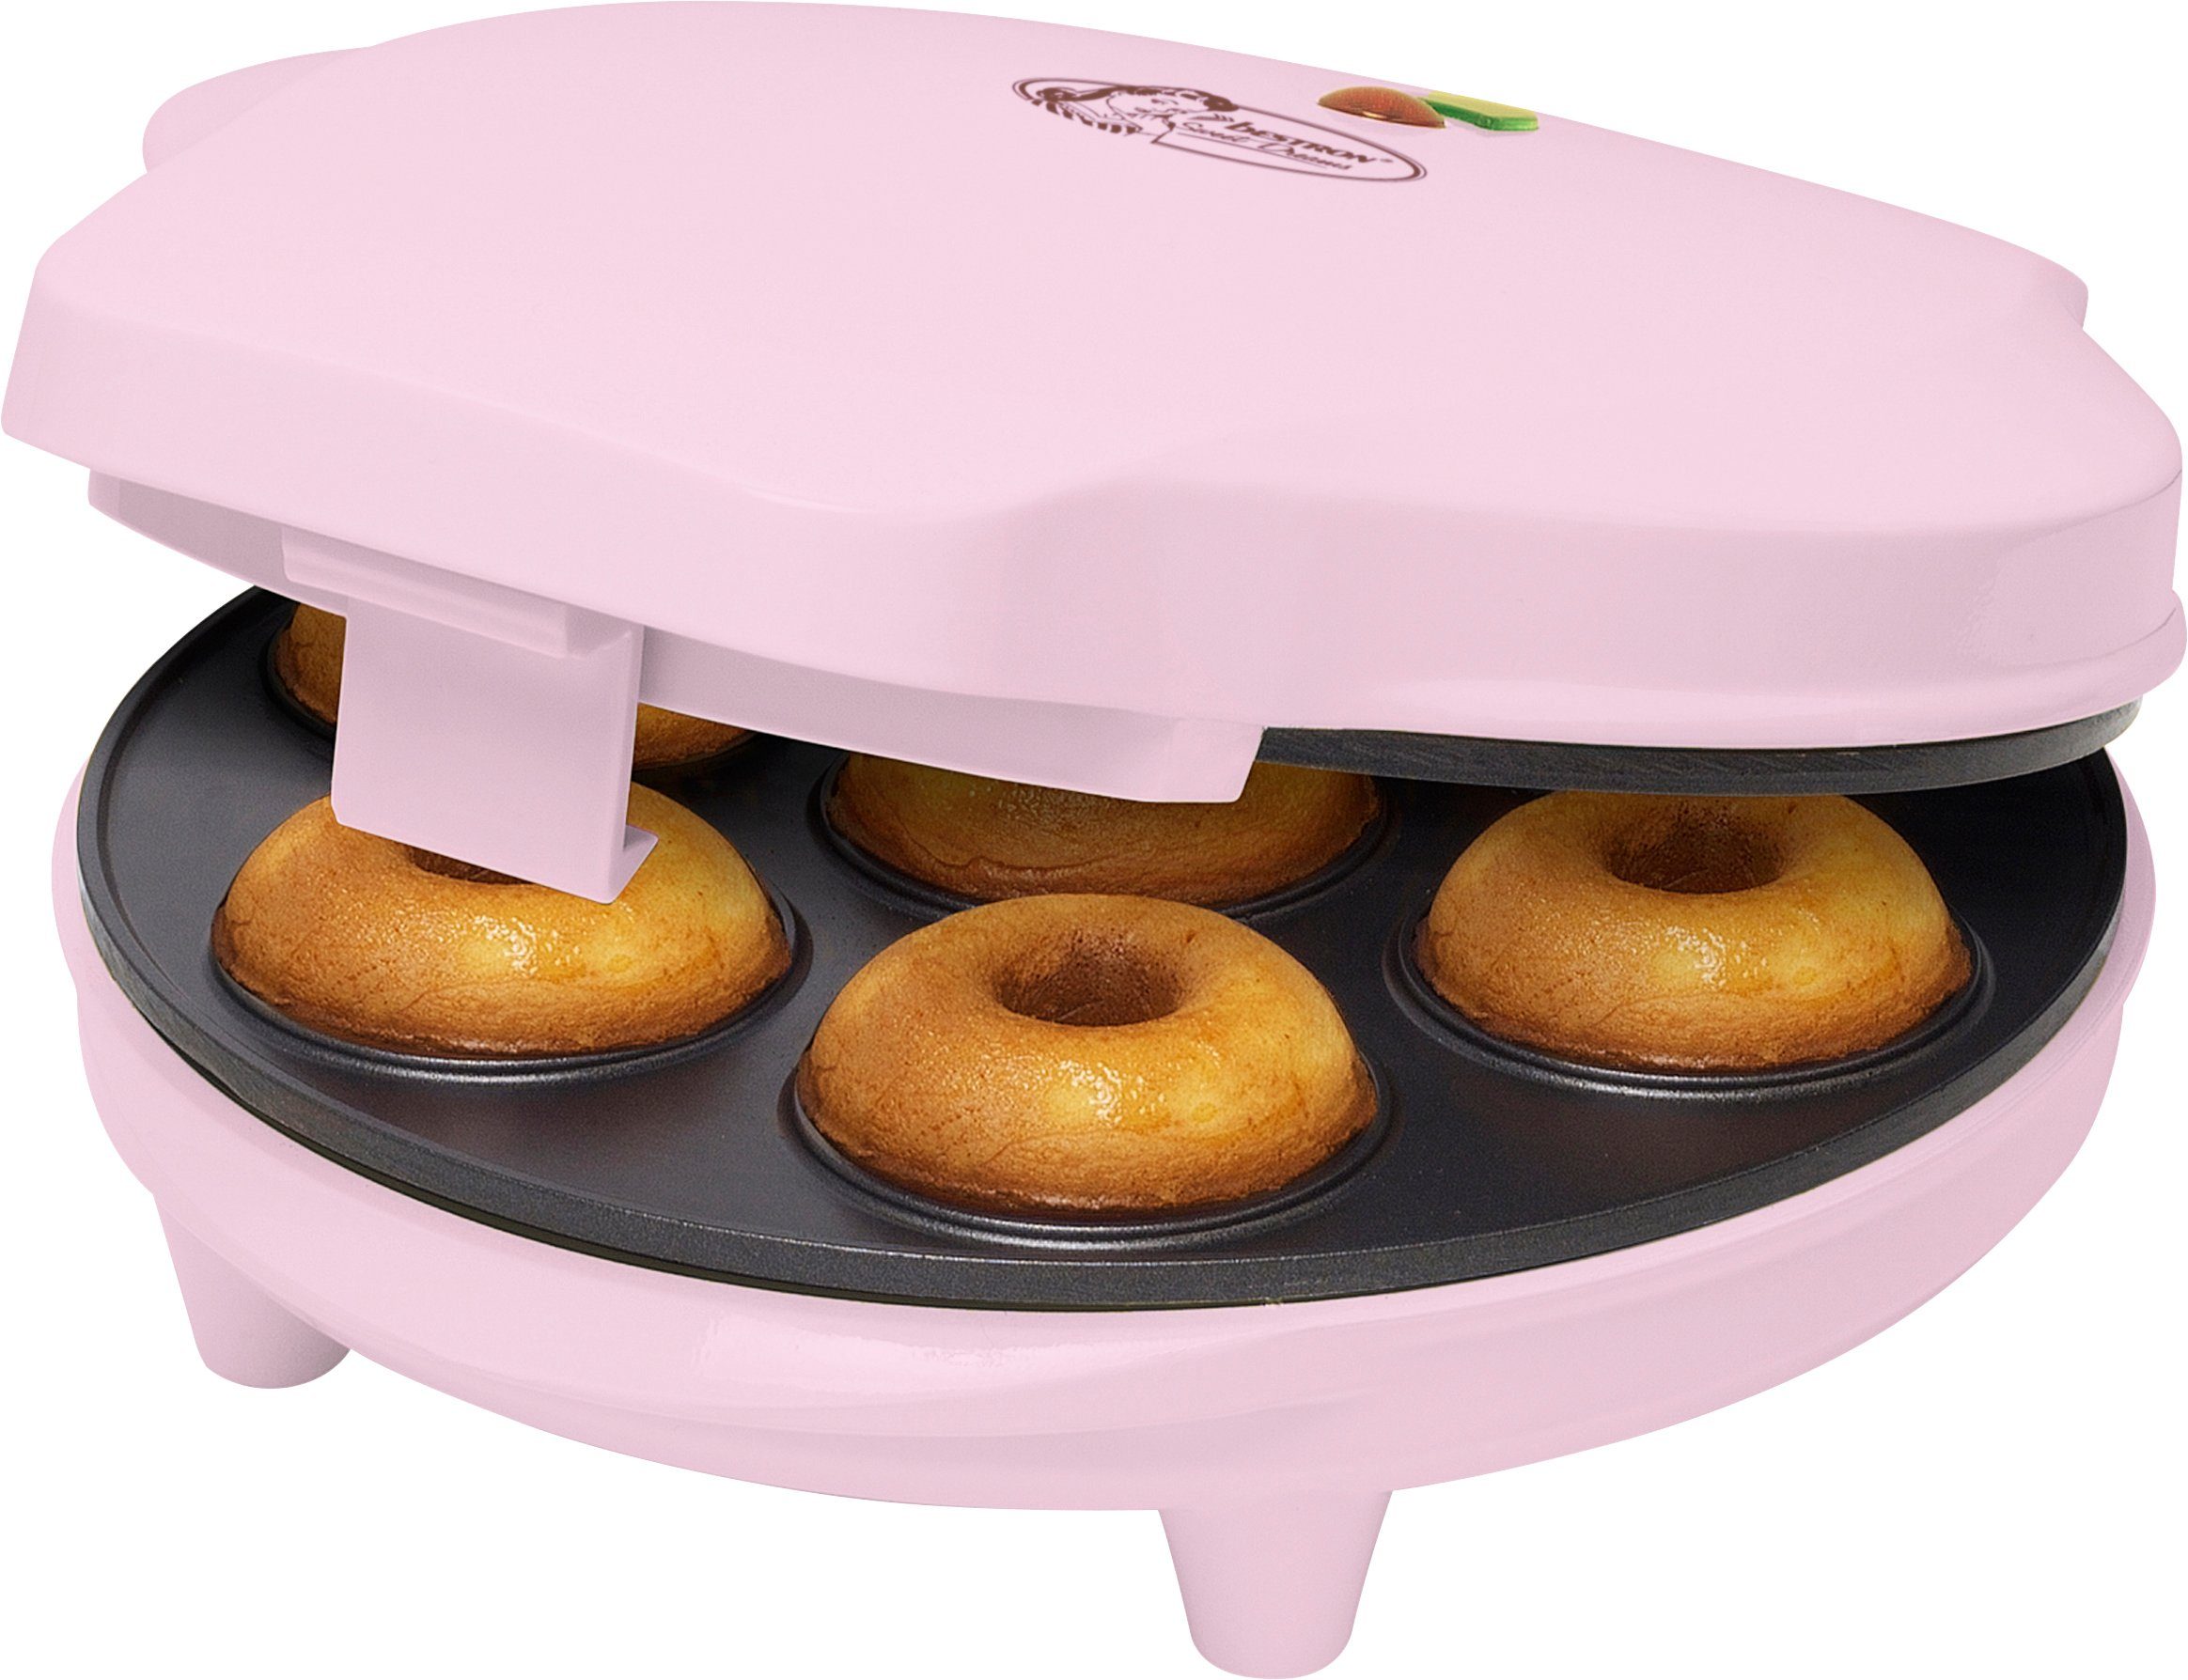 Design, Donut-Maker Rosa Waffeleisen 700 Retro im ADM218SDP, bestron Sweet Dreams, Antihaftbeschichtung, W,